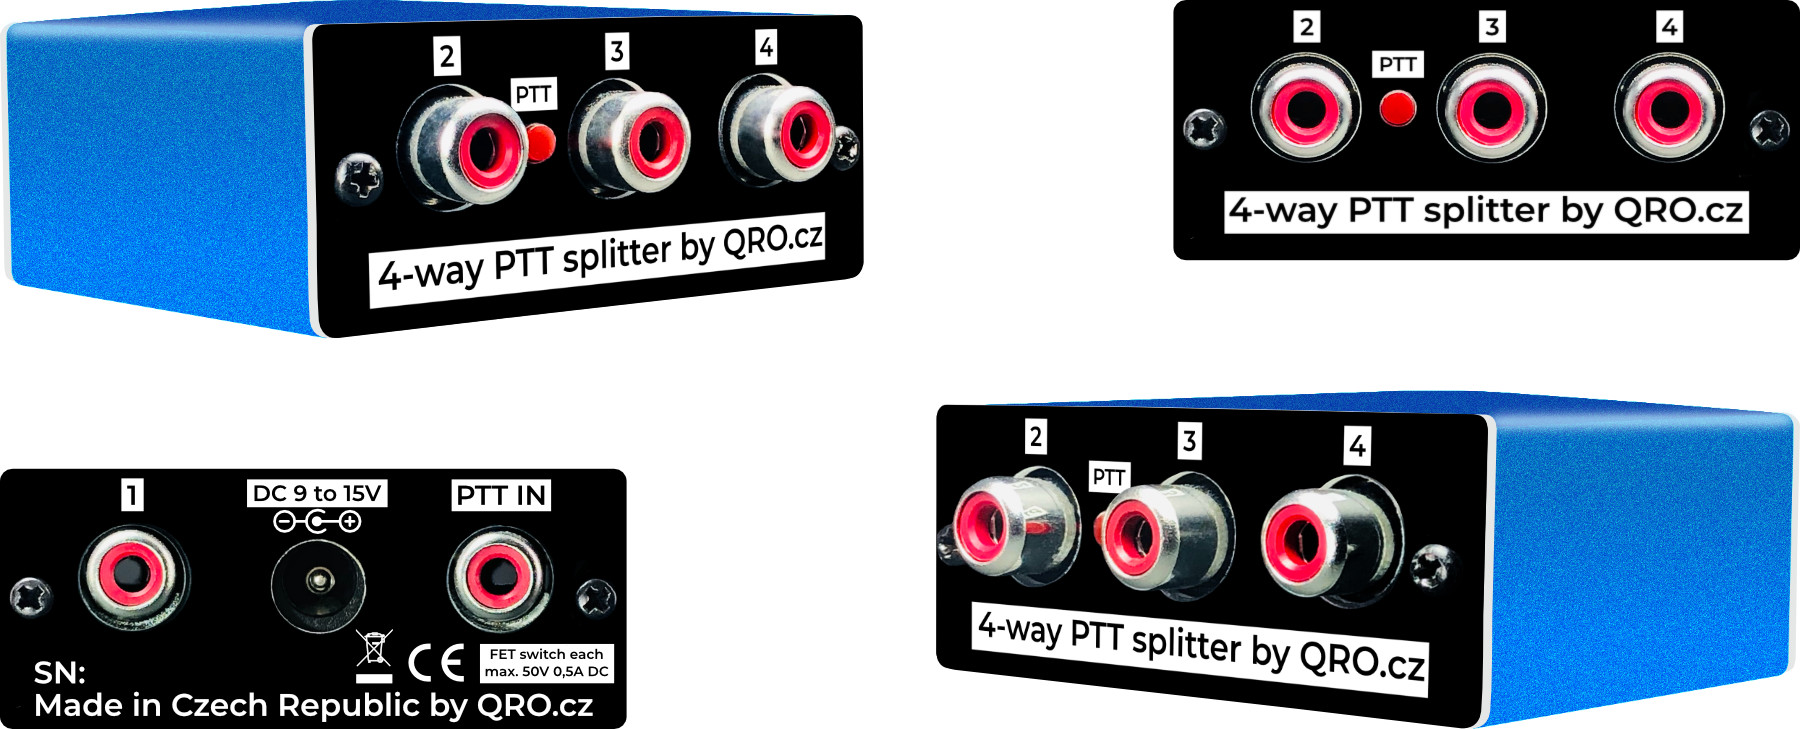 4-way ptt splitter assembled in enclosure by qro.cz hamparts.shop